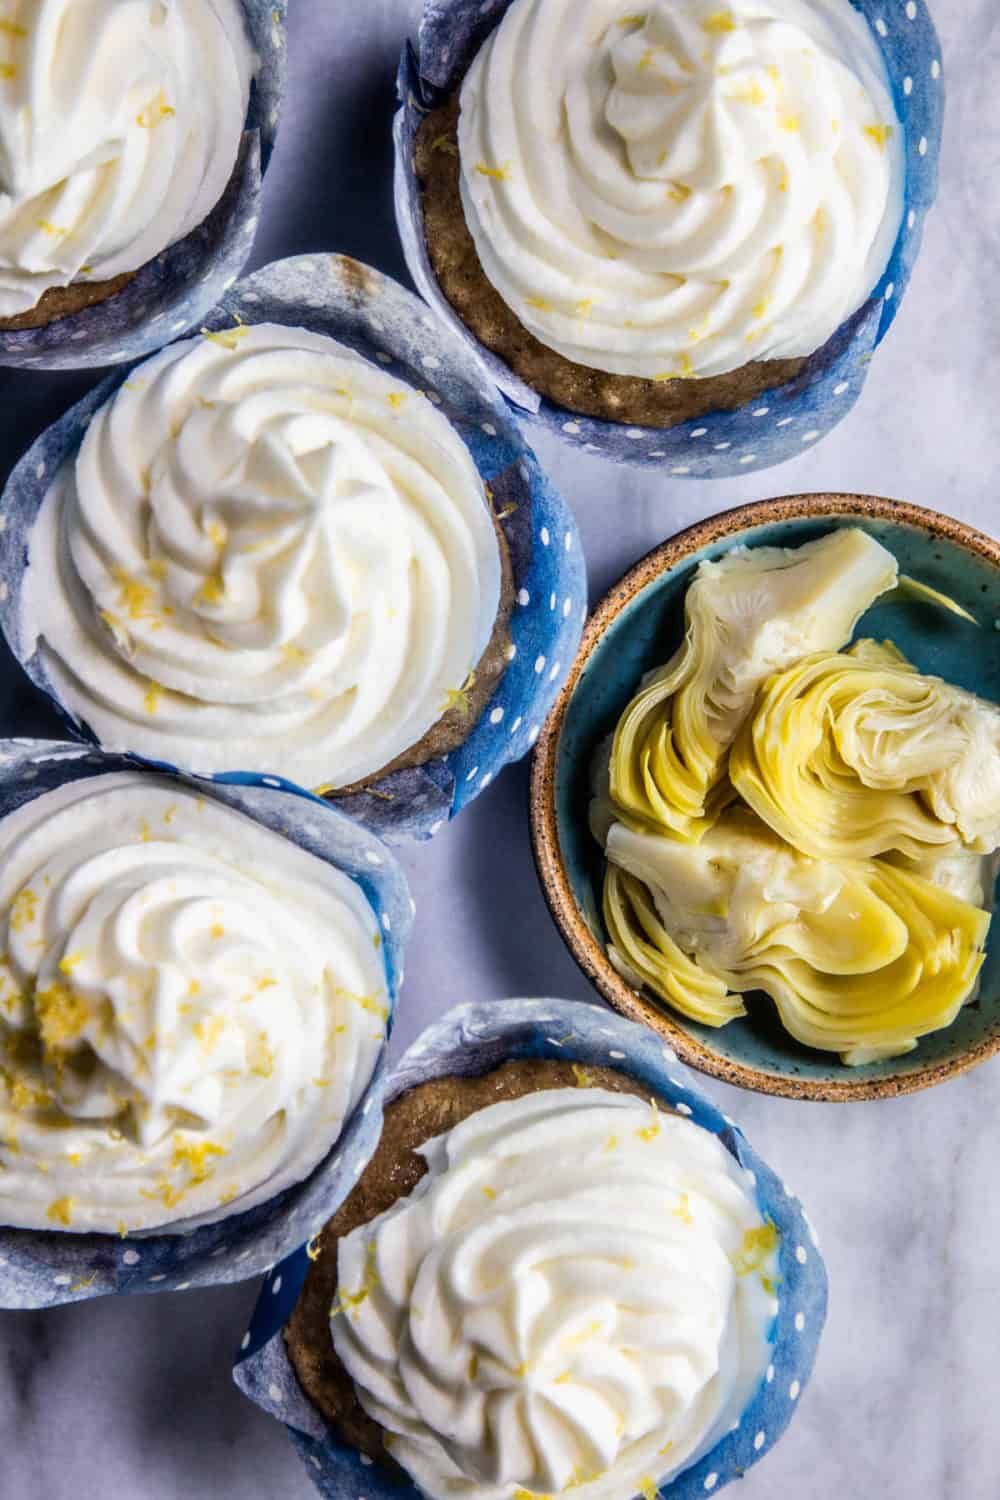 Lemon-Laced Artichoke Cupcakes next to a bowl of artichoke hearts.